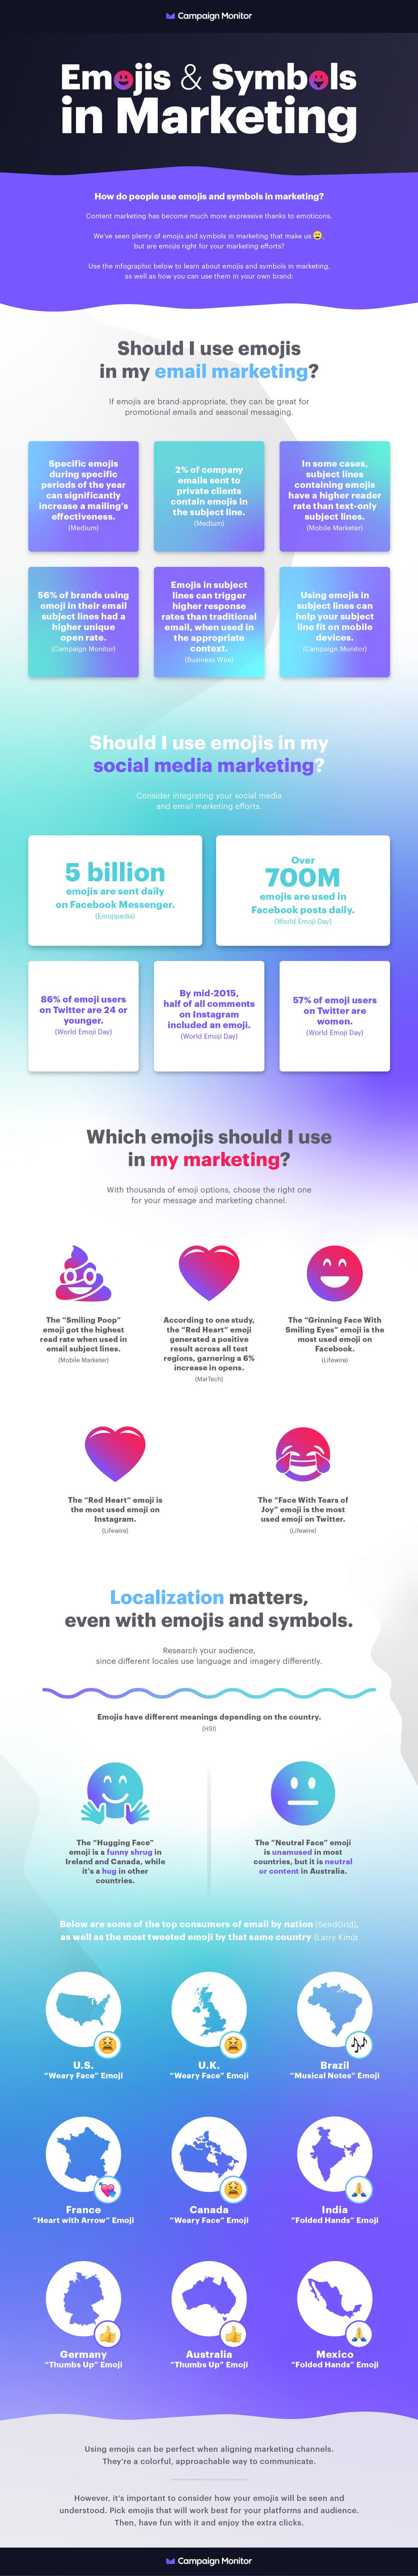 emojis and symbols in marketing